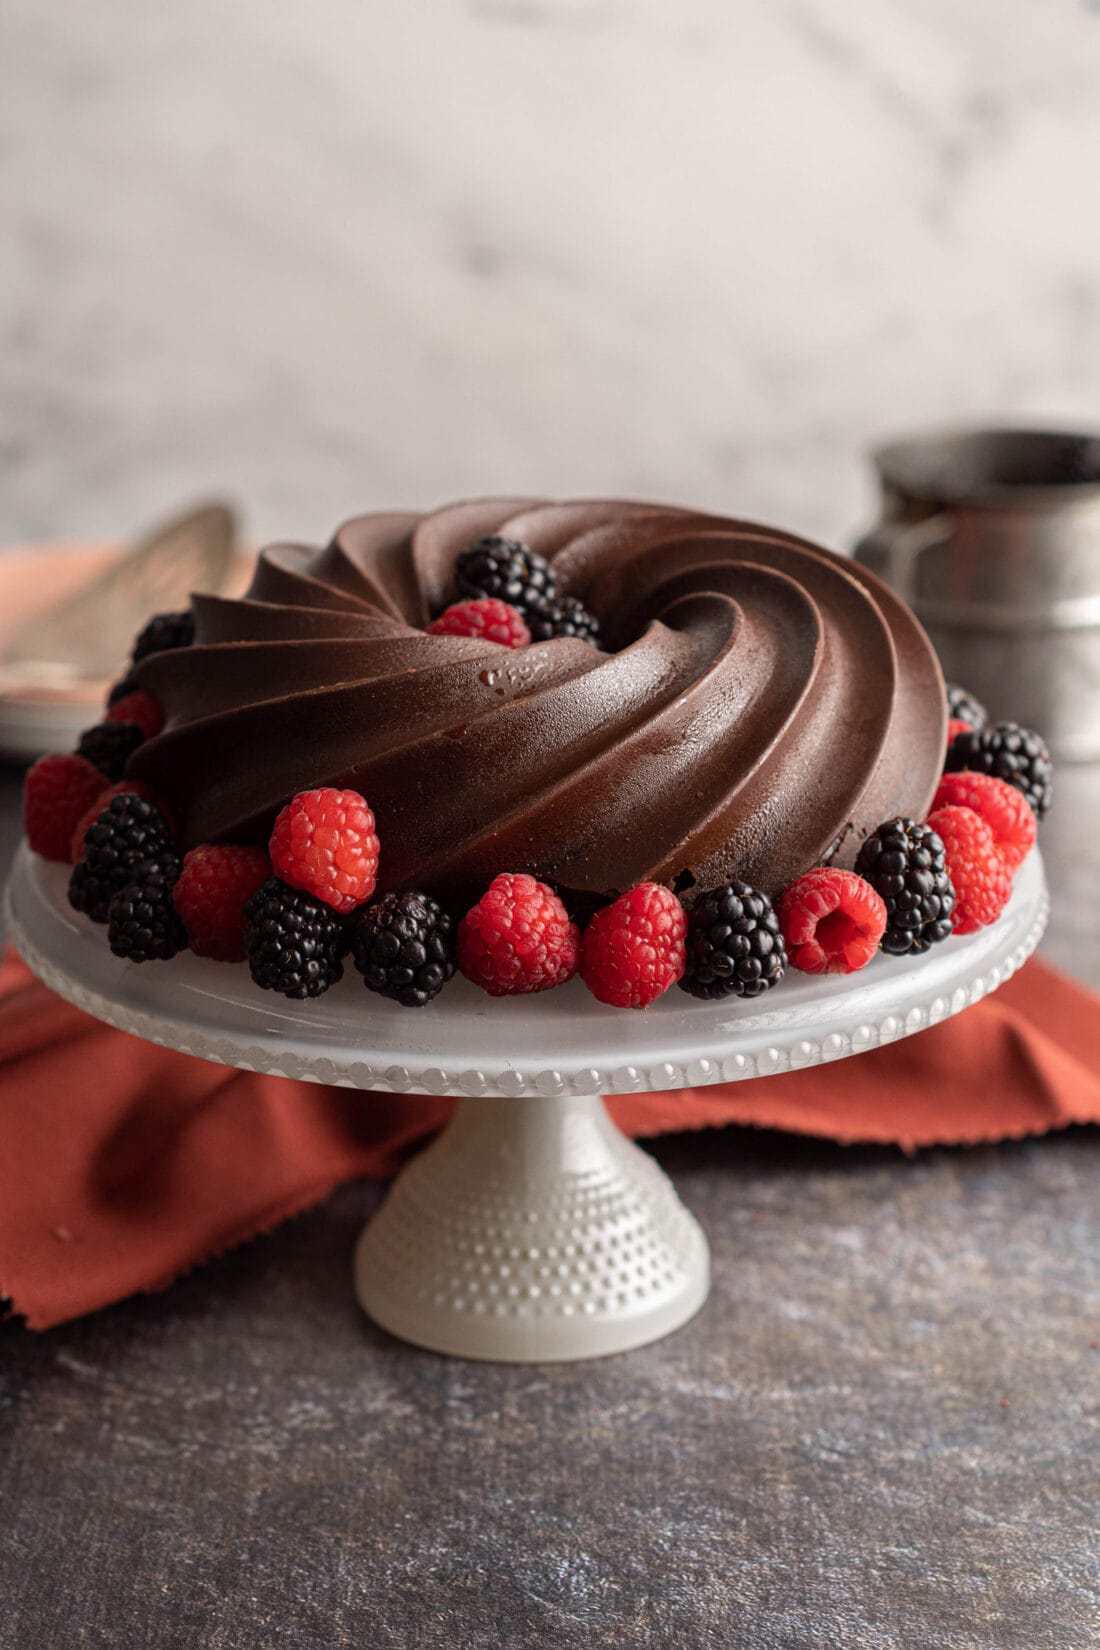 Chocolate Pound Cake on a cake plate